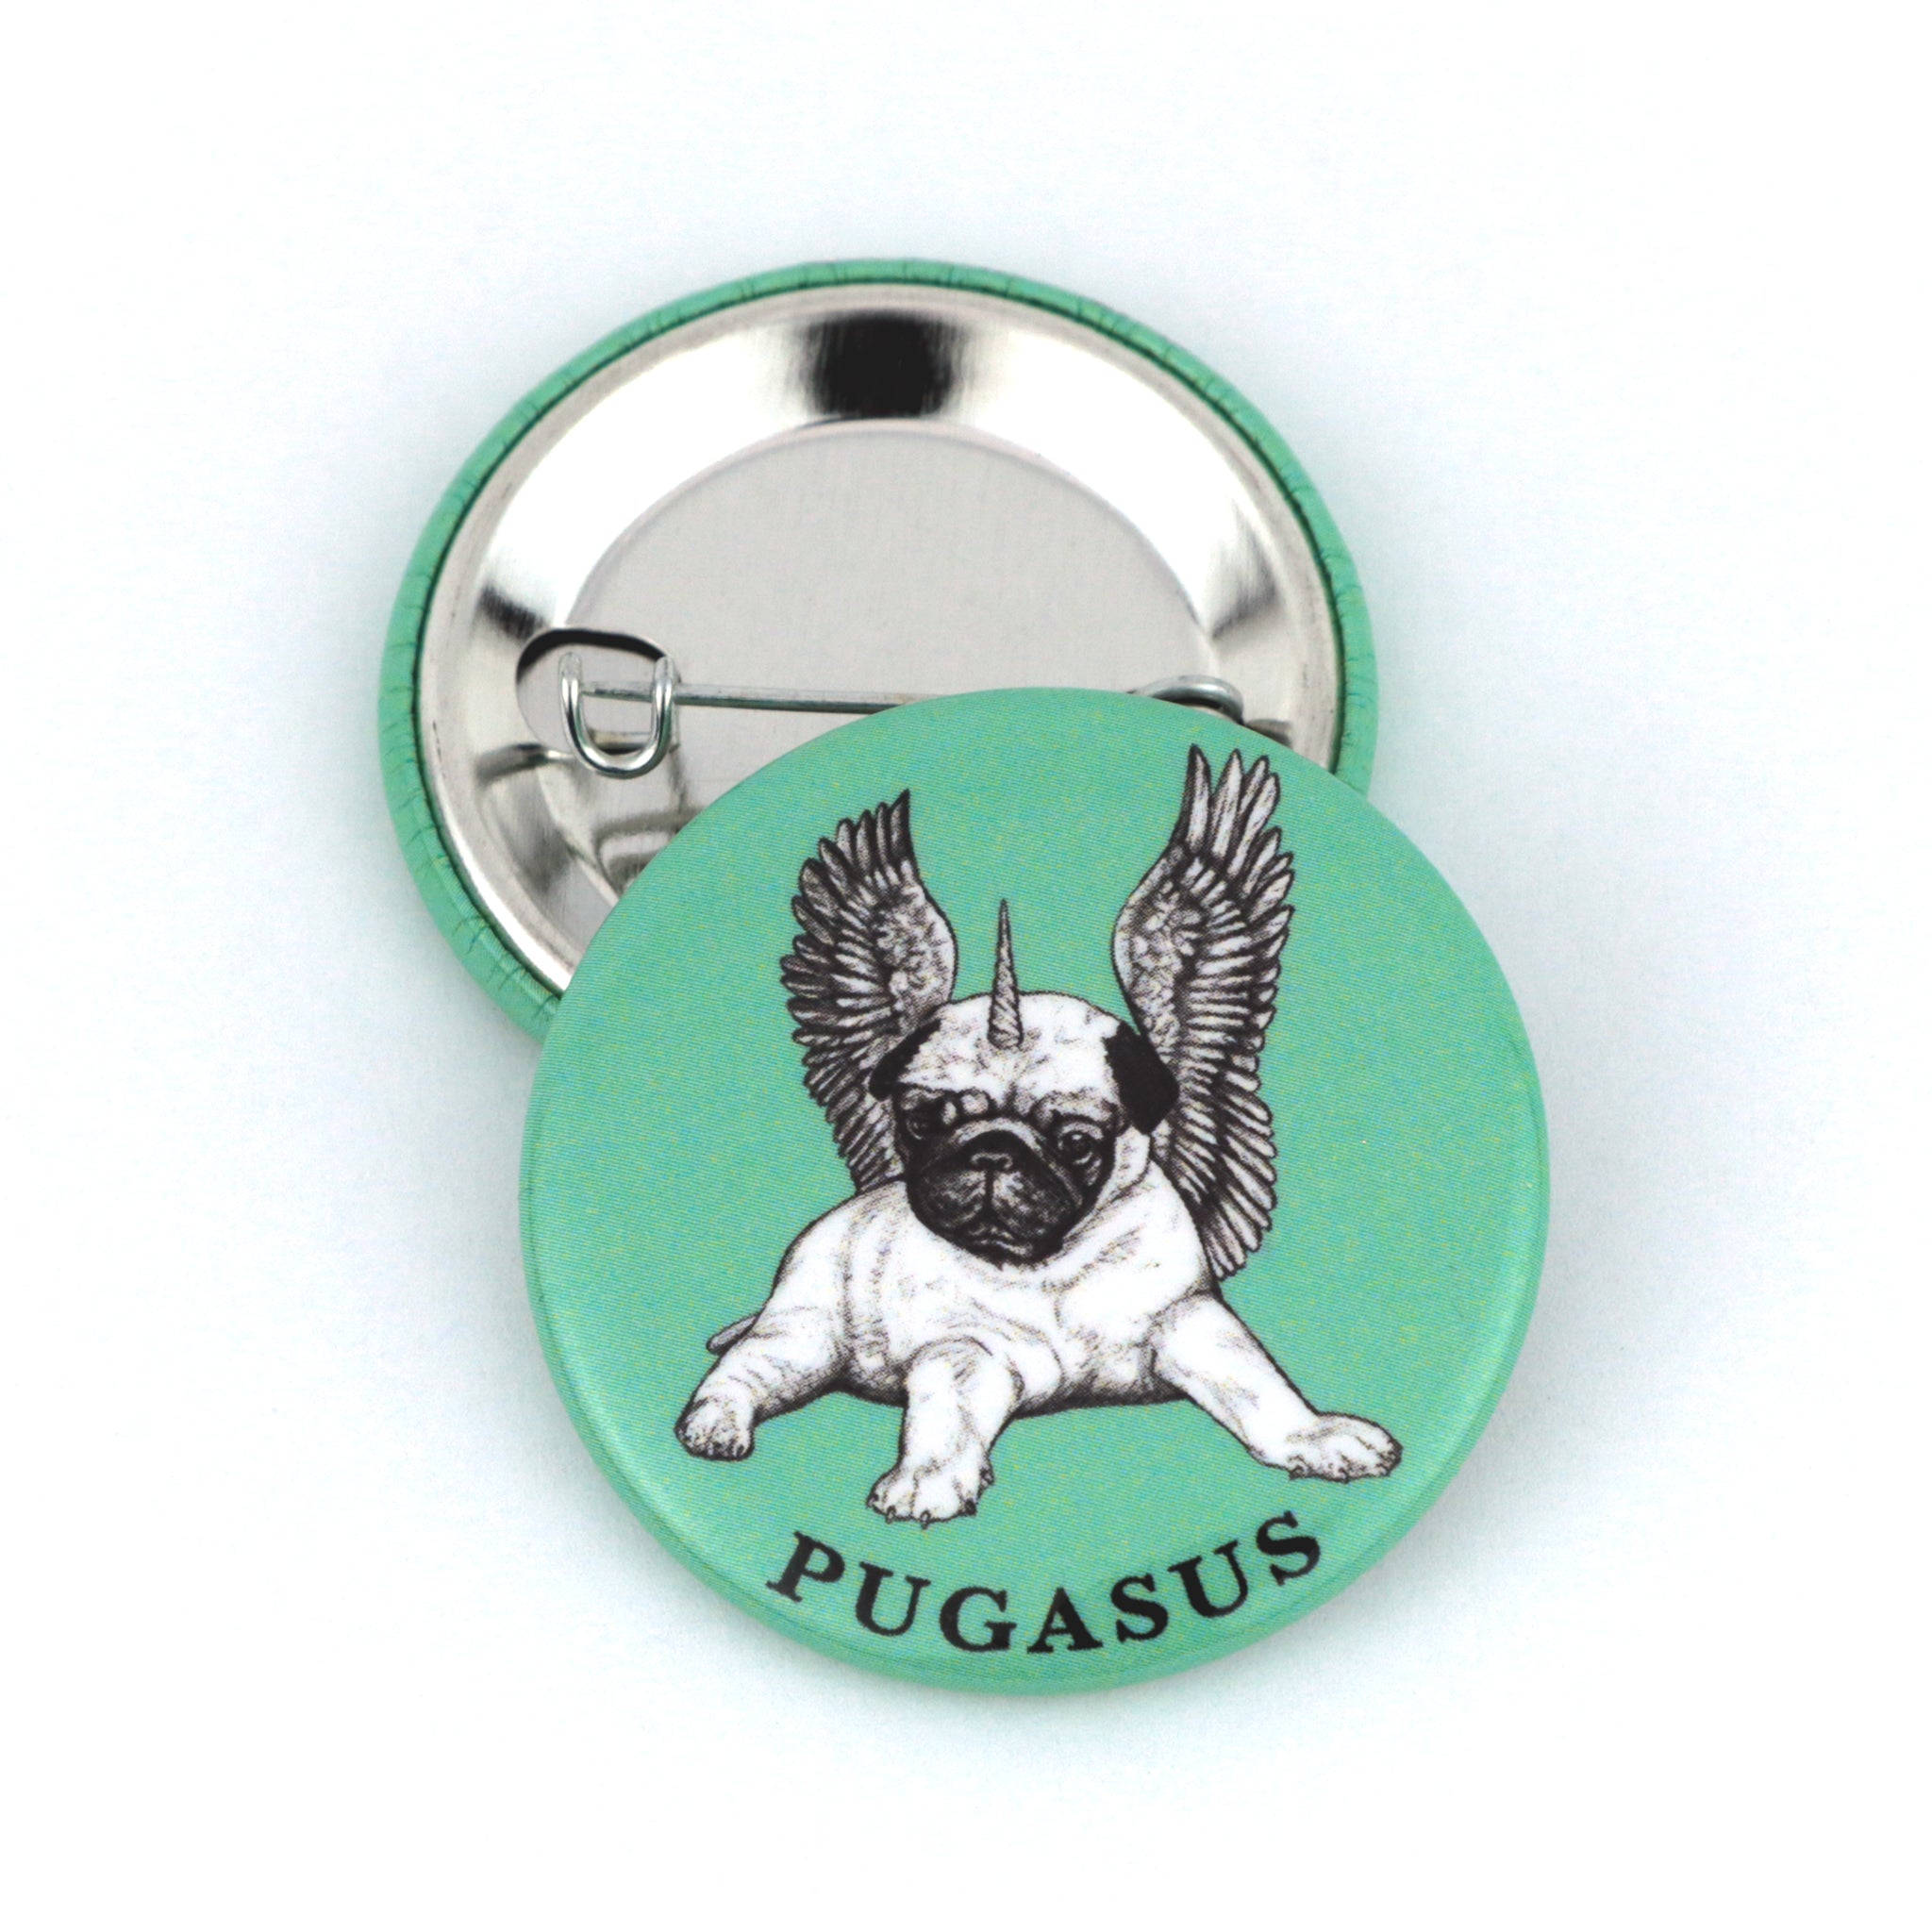 Pugasus | Pug + Pegasus Hybrid Animal | 1.5" Pinback Button